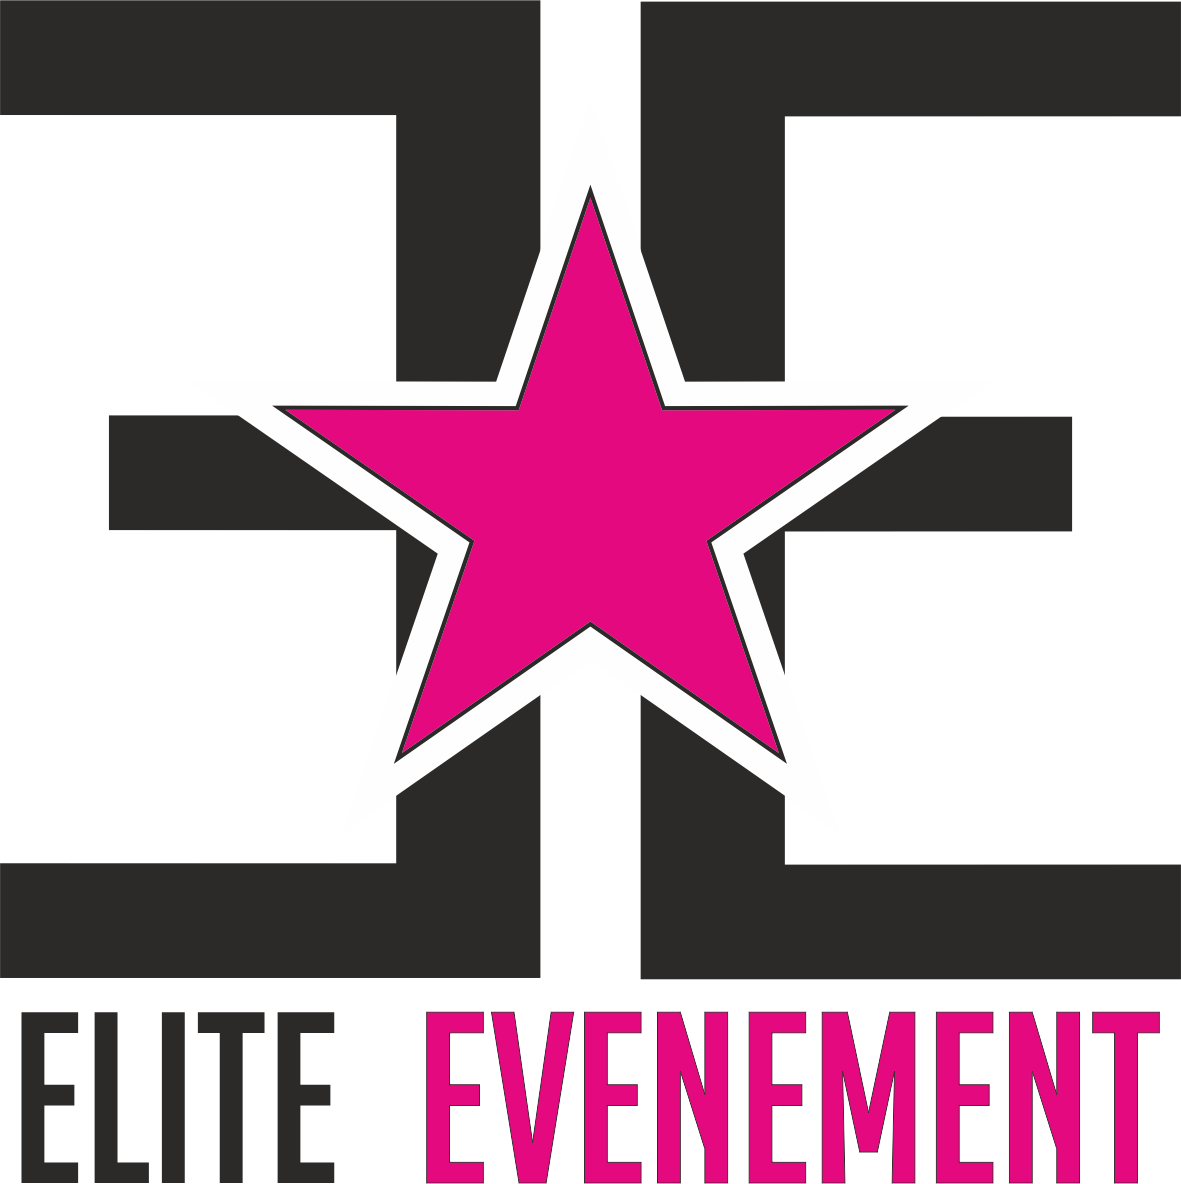 Elite evenement